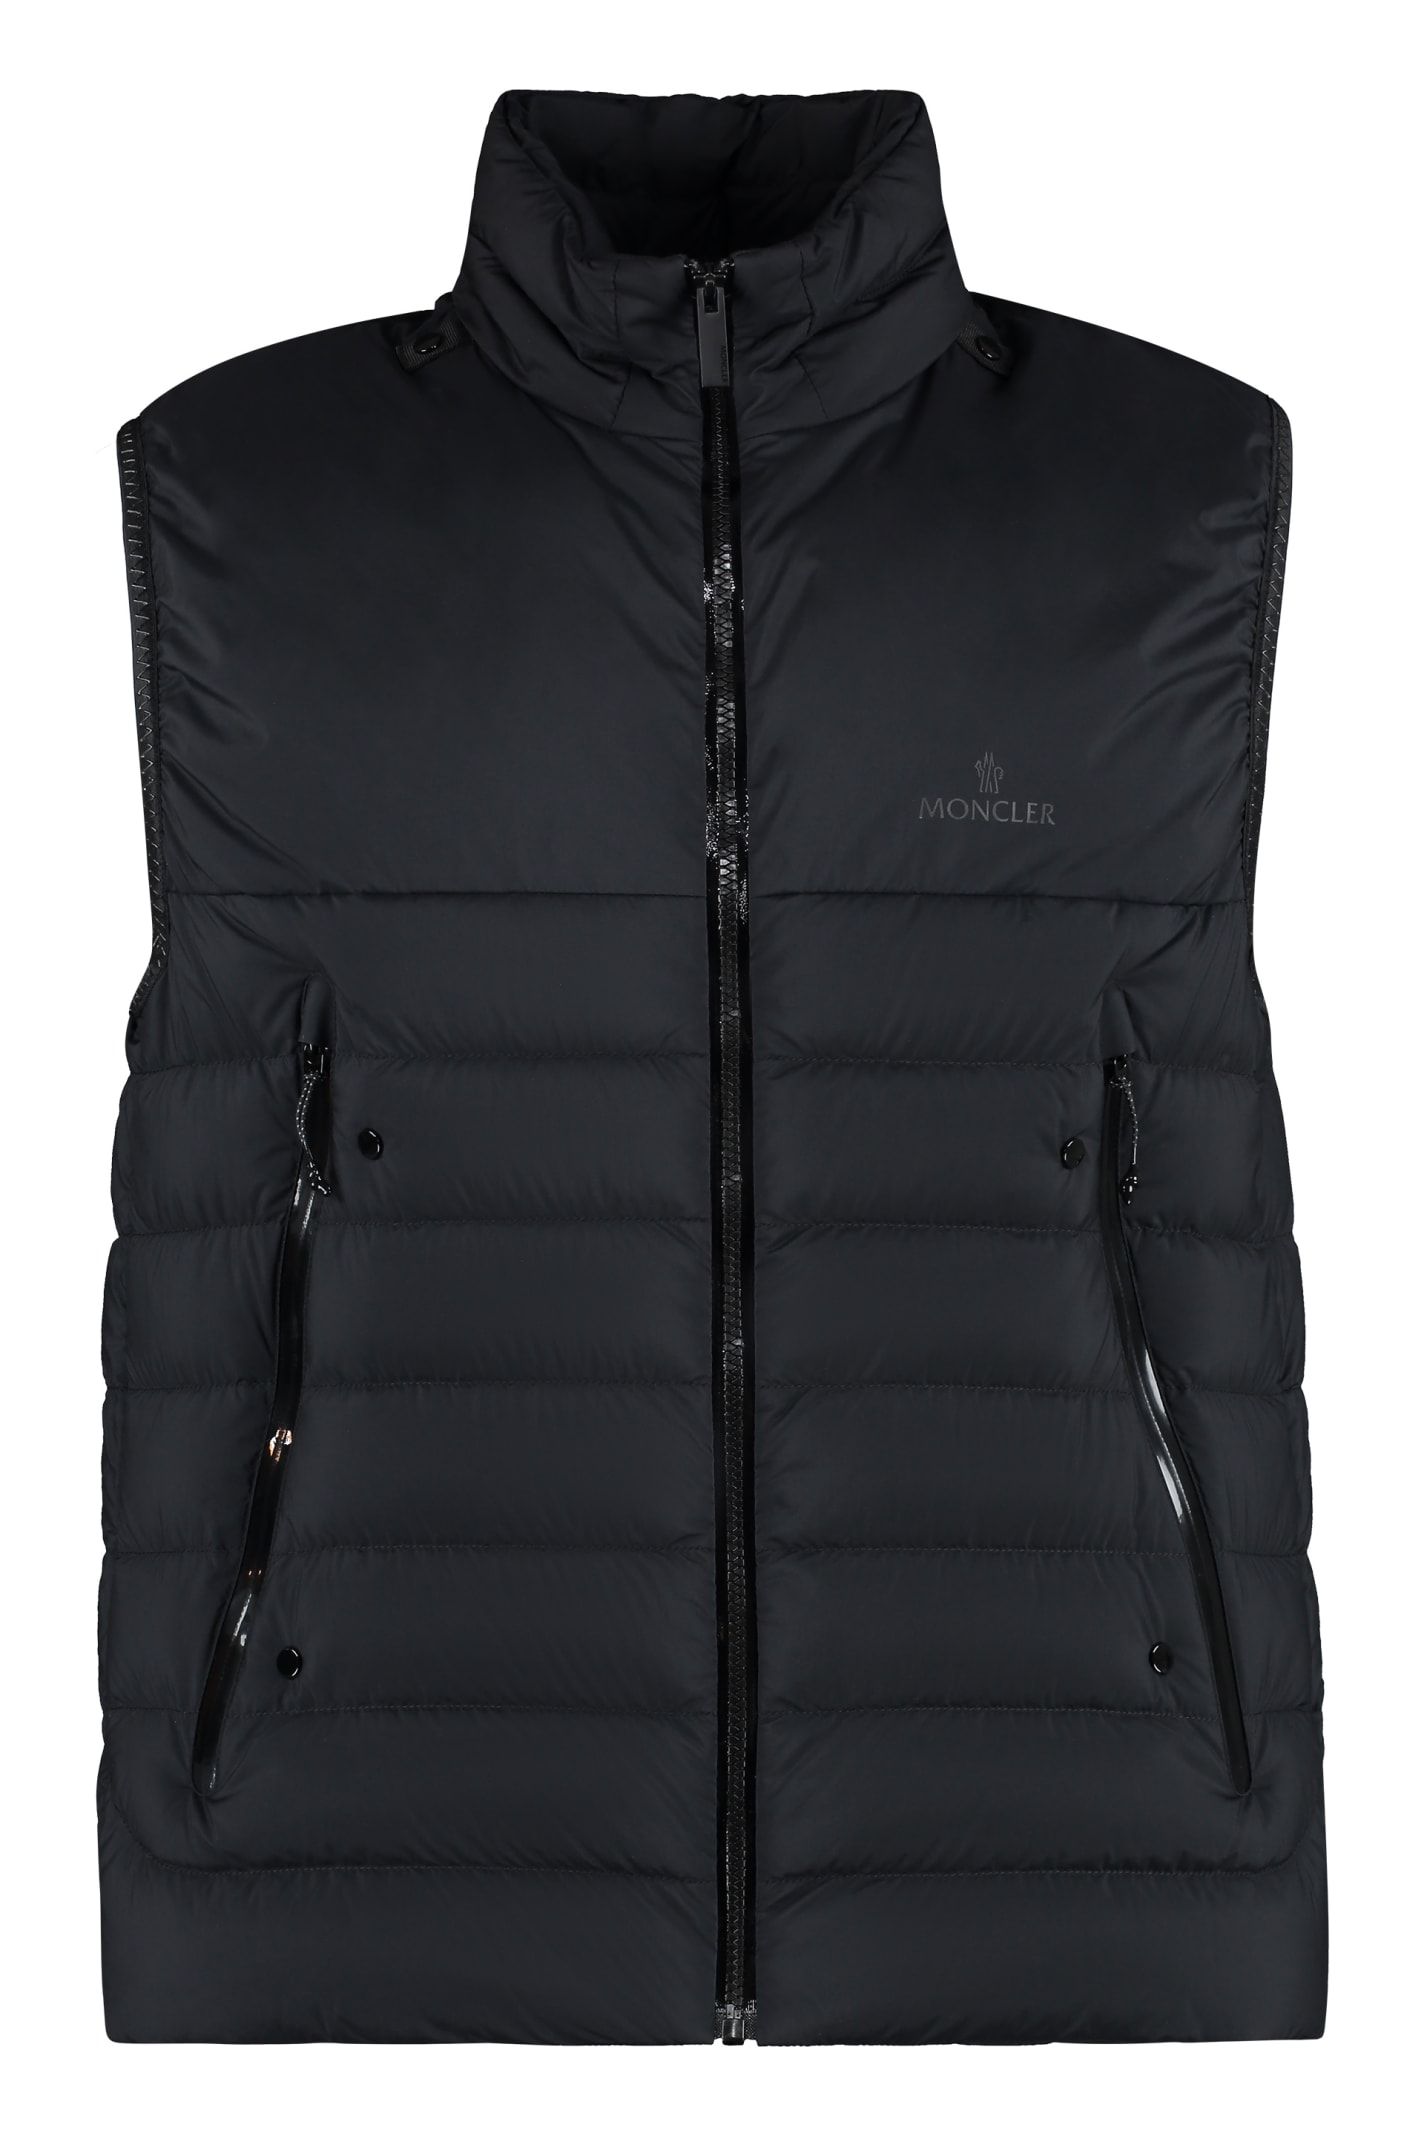 Moncler Koror Bodywarmer Jacket In Black